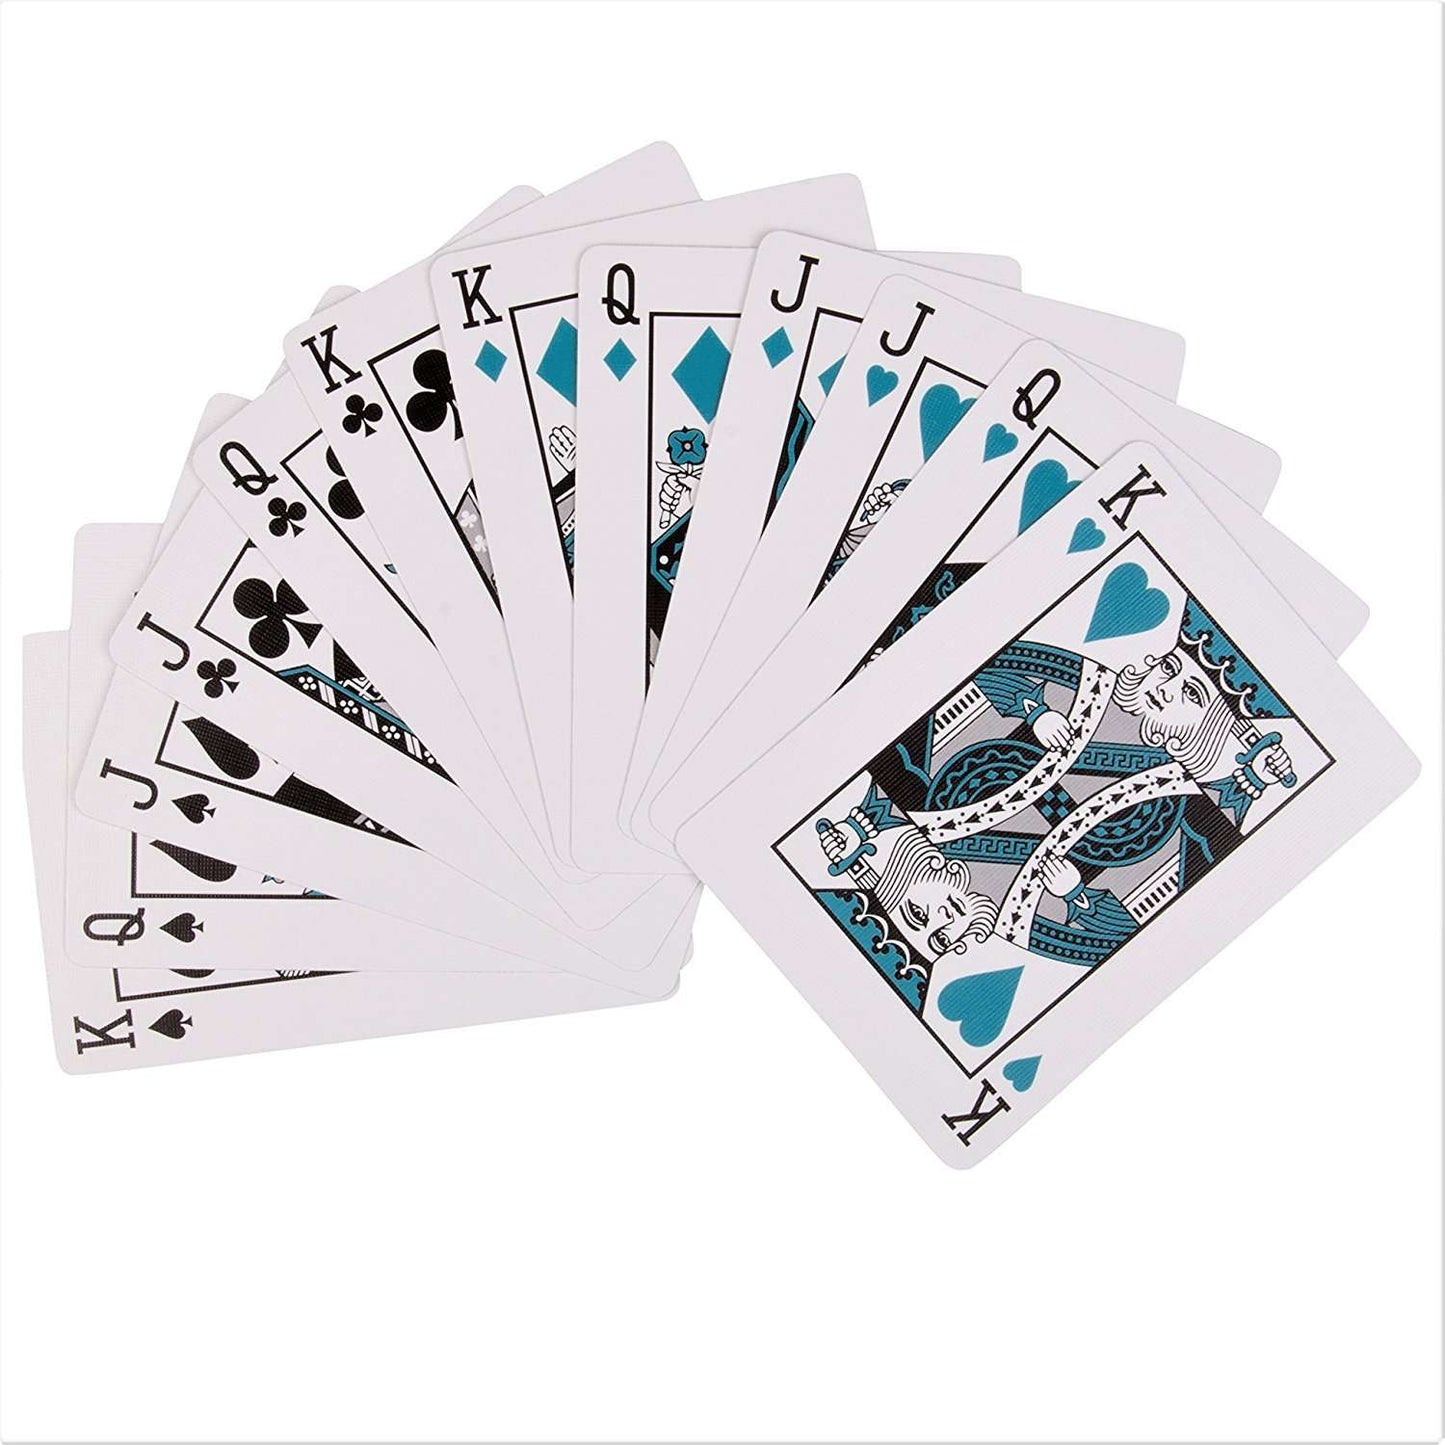 PlayingCardDecks.com-Sea Shepherd Playing Cards USPCC